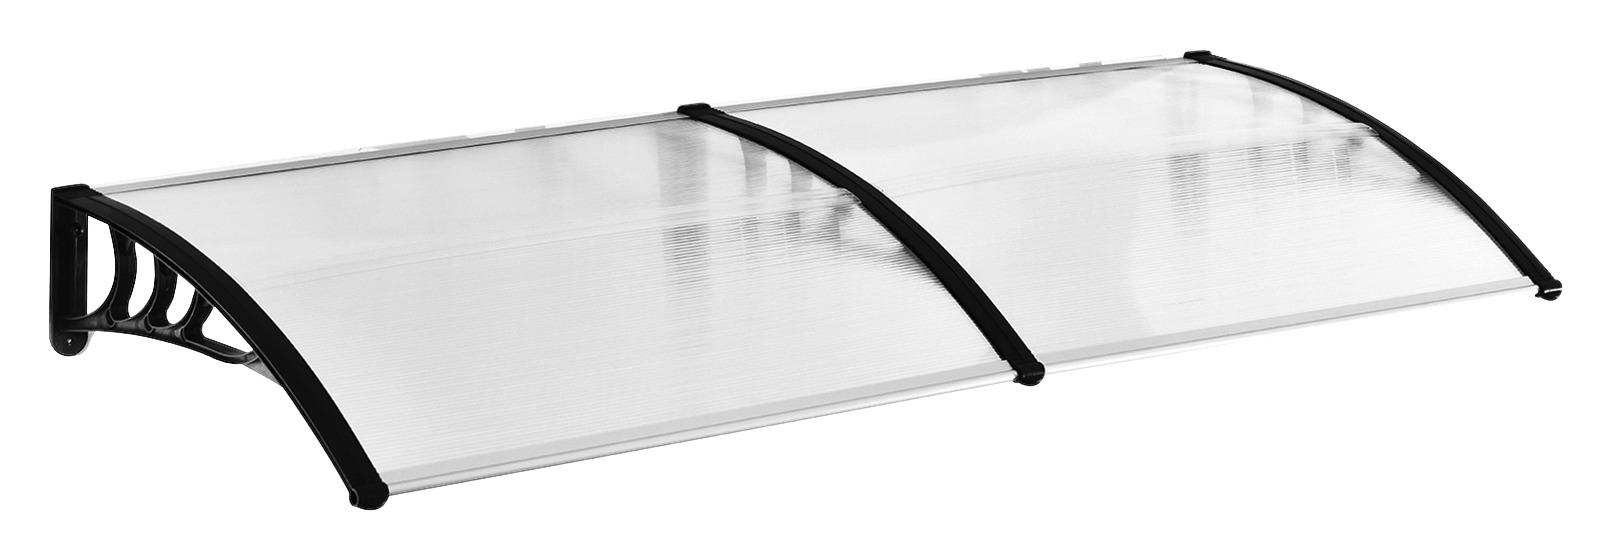 Outsunny Pultvordach transparent B/H/L: ca. 80x23x195 cm ca. 4,39 kg Pultvordach  MHB70-047WT - schwarz/transparent (195,00/80,00/23,00cm)